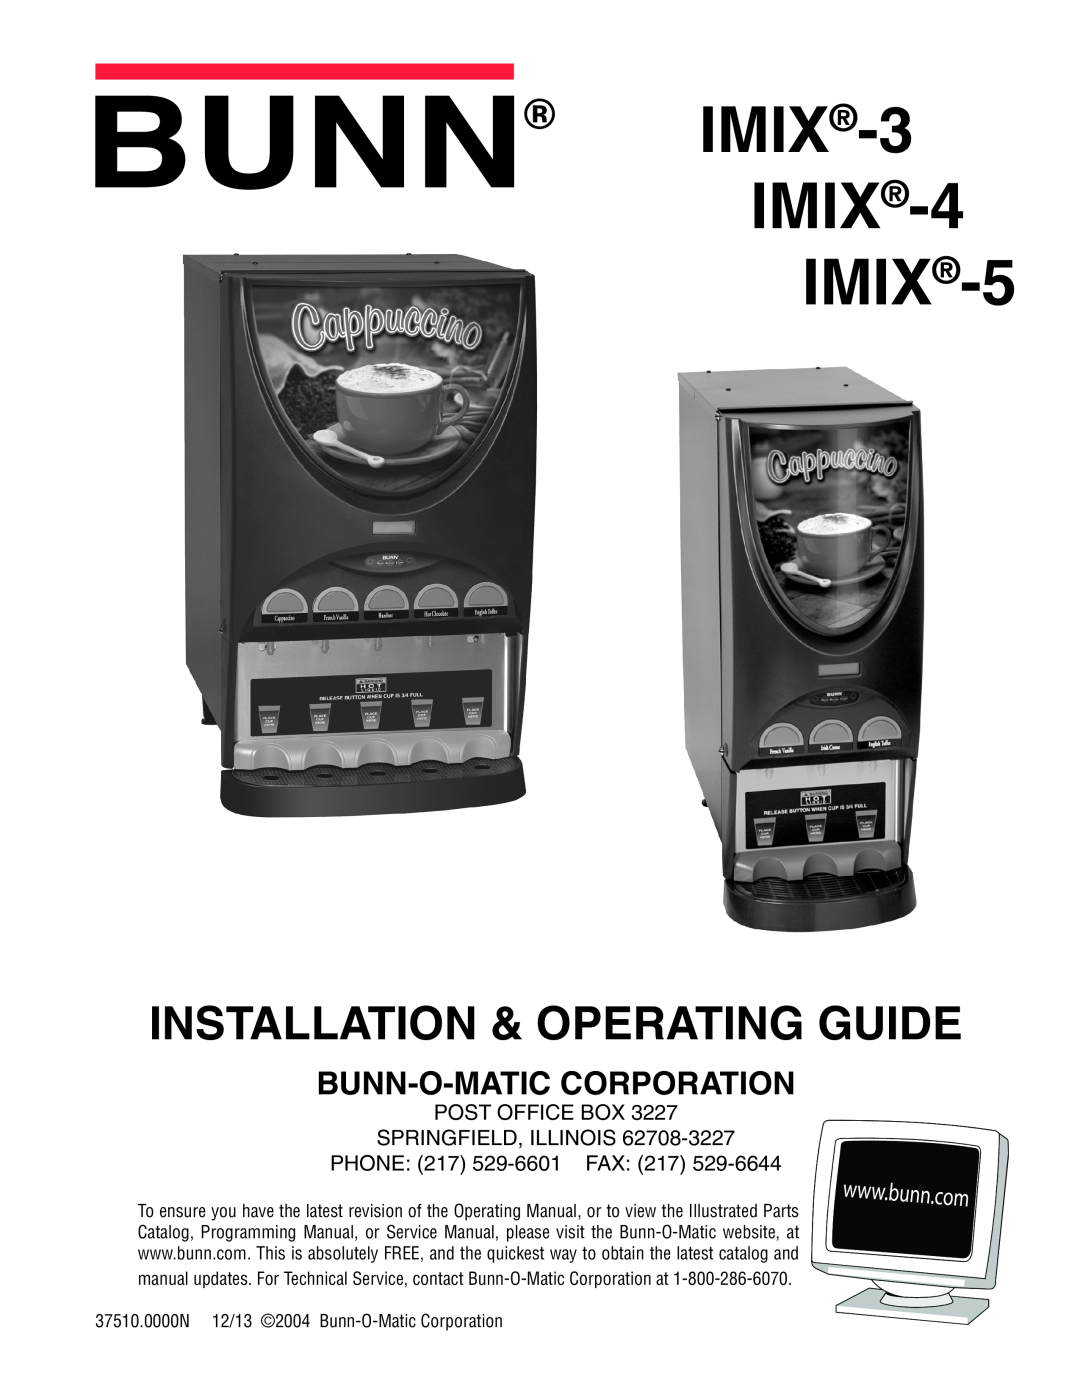 Bunn service manual IMIX-3 IMIX-4 IMIX-5, Installation & Operating Guide, Bunn-O-Maticcorporation 